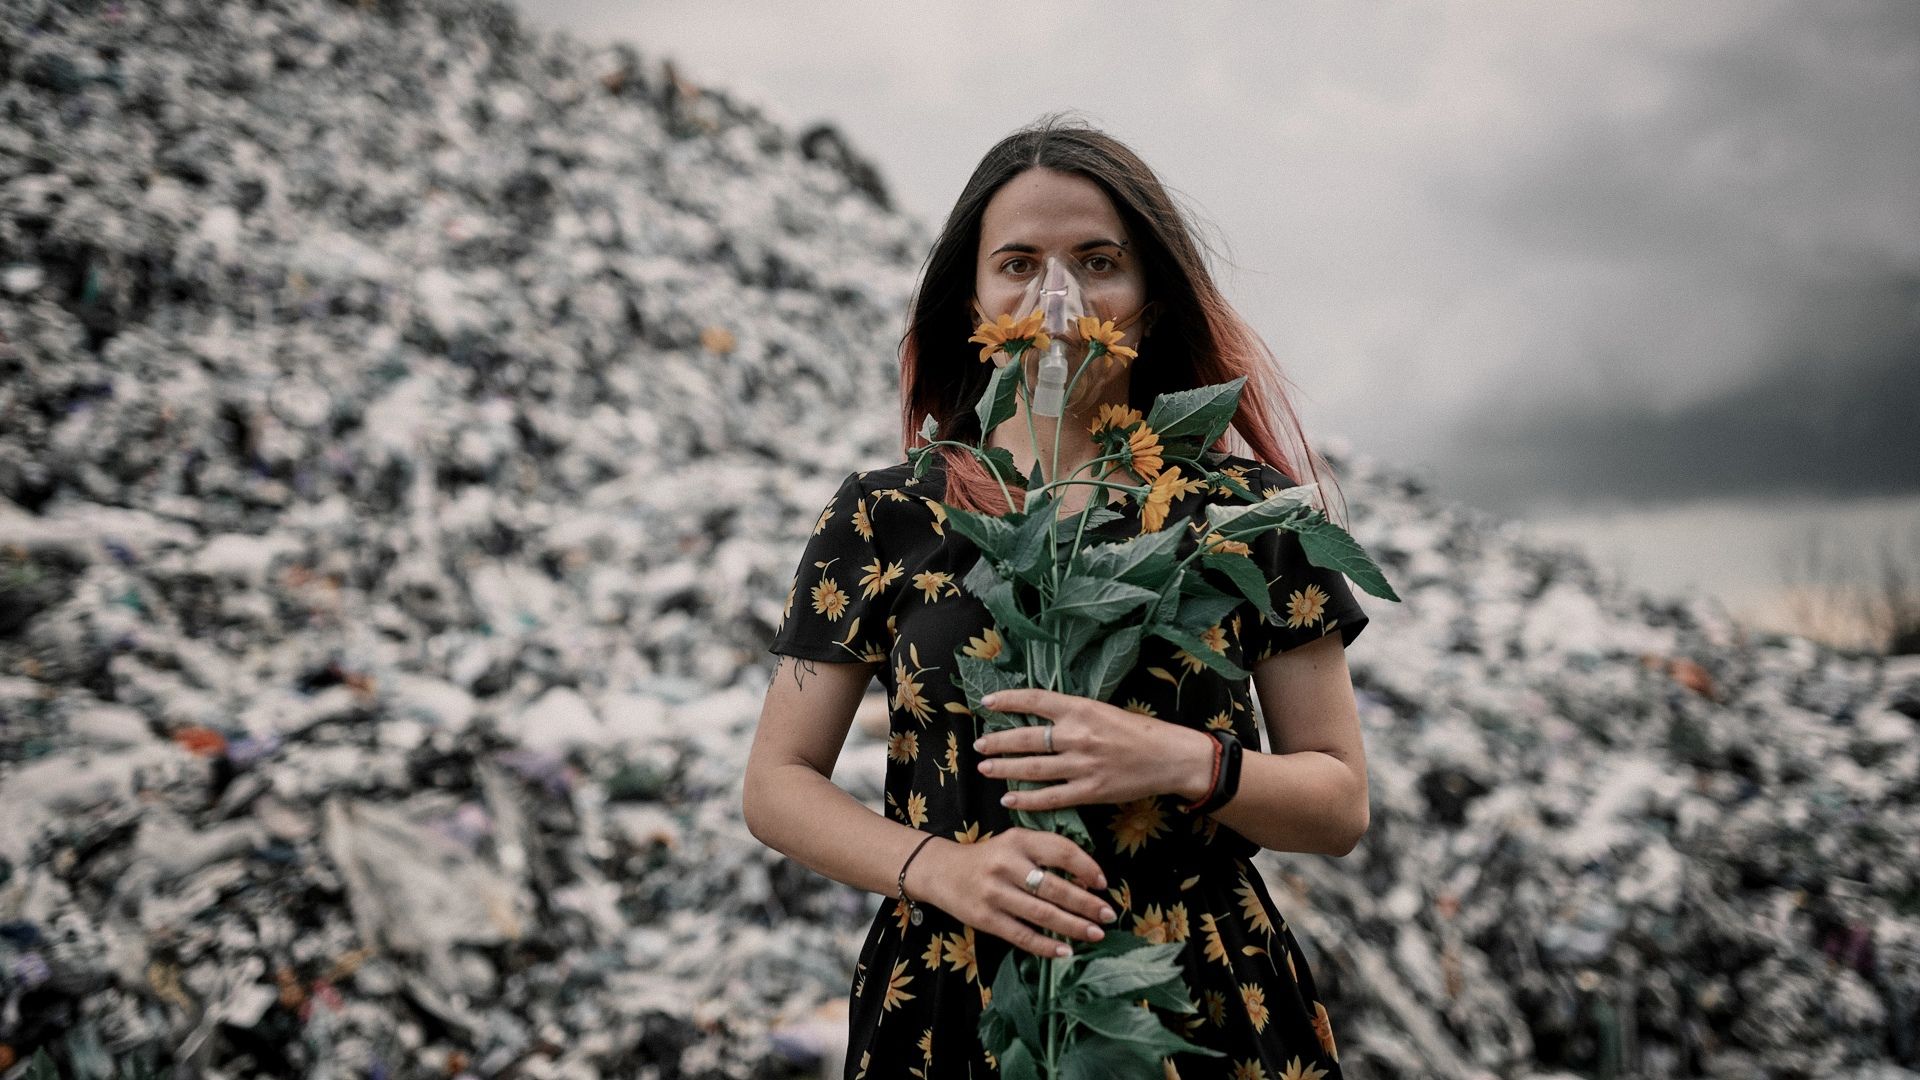 #photo #photosession #Ukraine #poltava #tfp #ecology #nature #girl #alone #dump #trash #dirt #planet #greenpeace #life #social #walk #sigma35mmart #flover, Ведь Денис